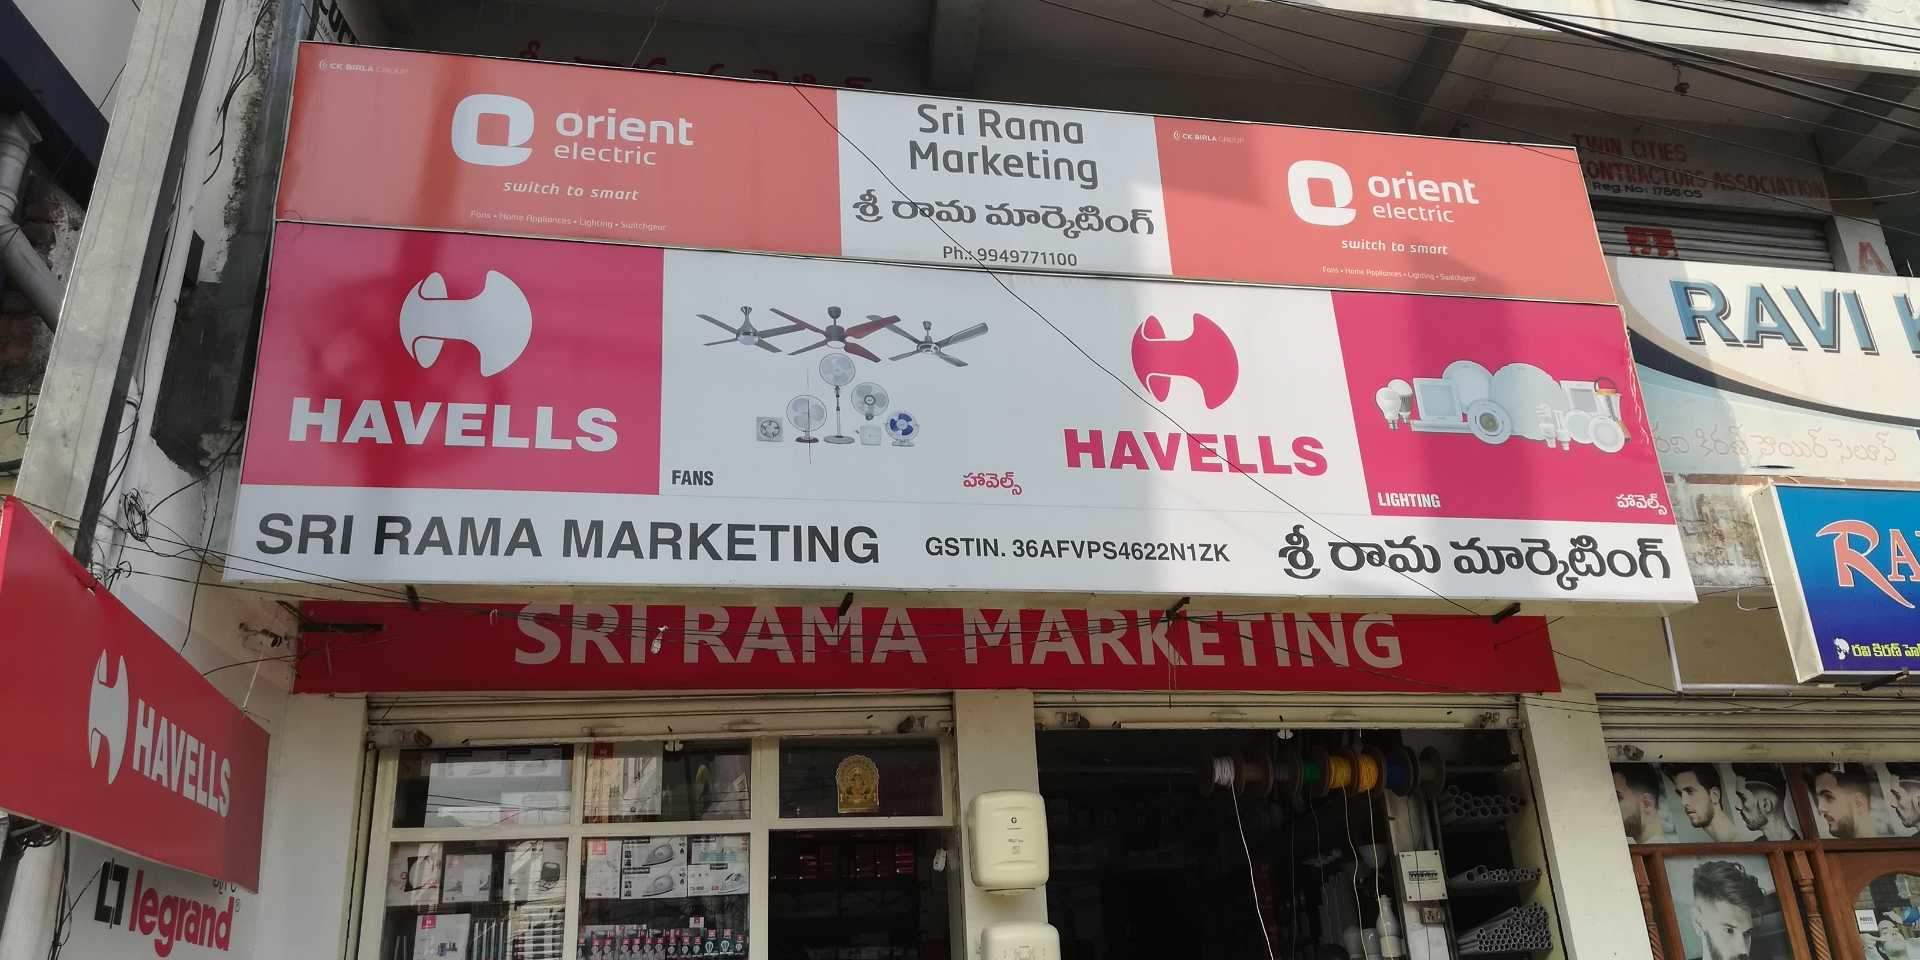 Sri Rama Marketing